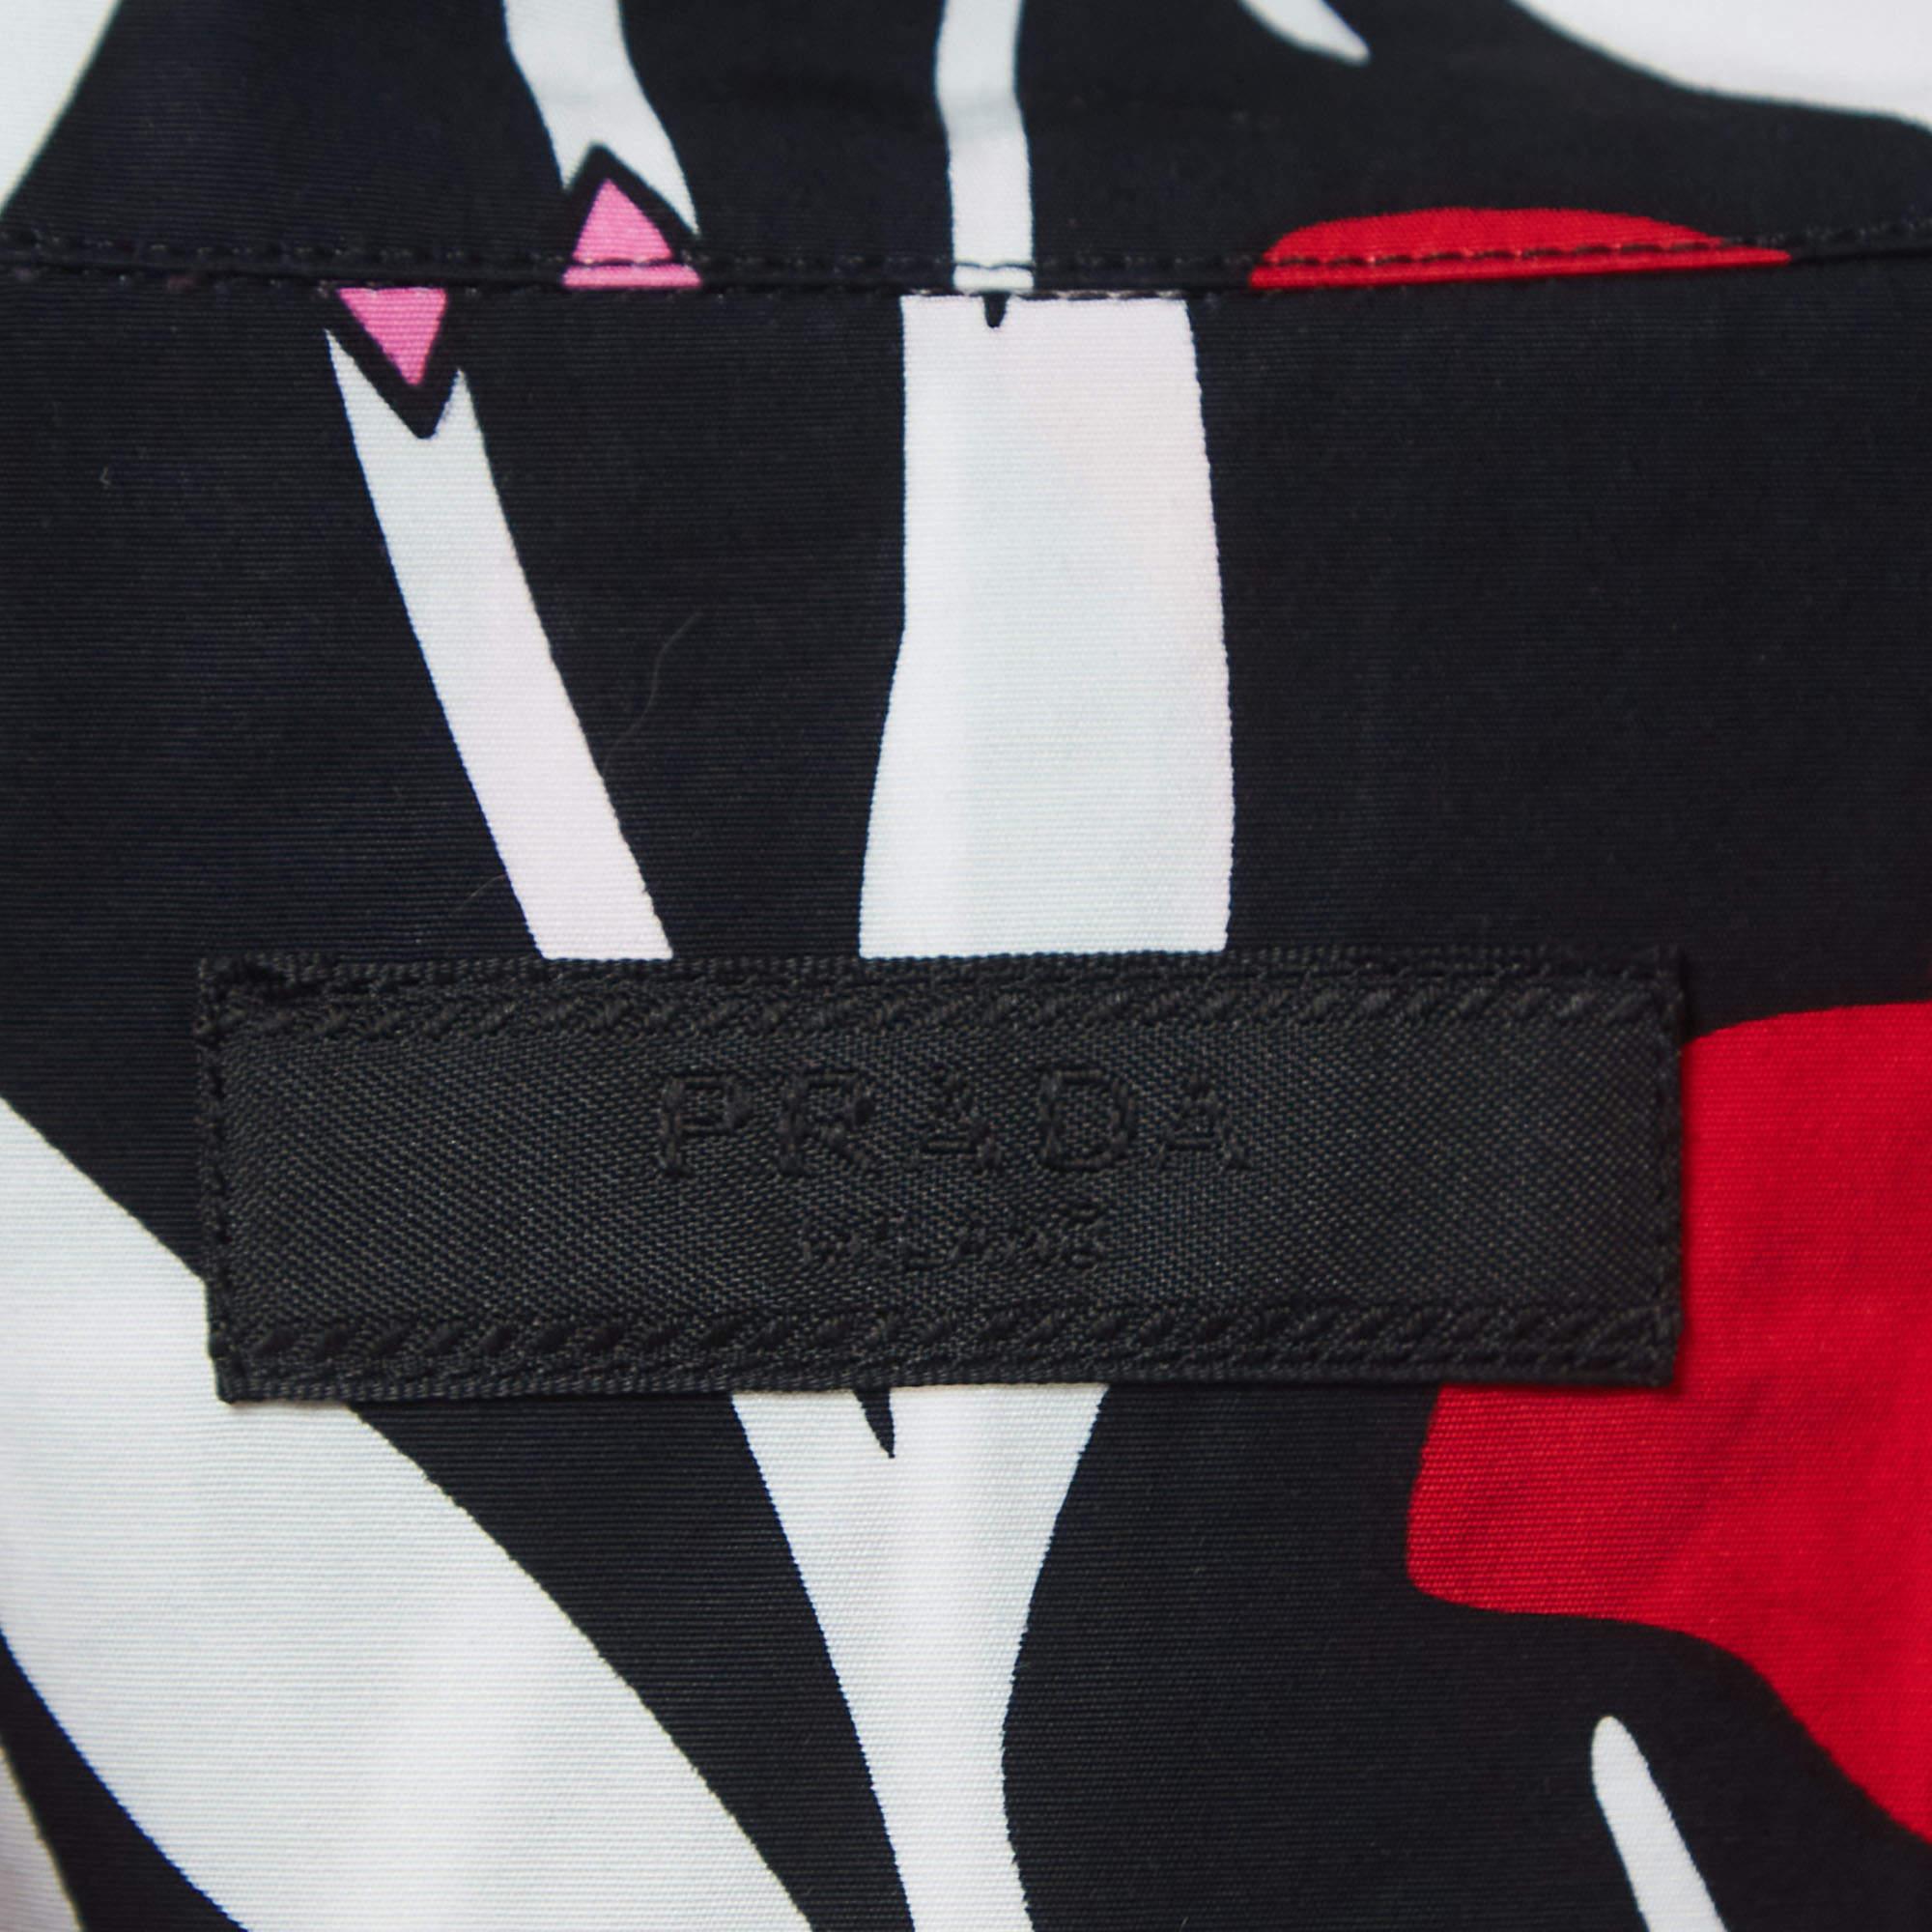 Prada Red/Black Floral Print Cotton Short Sleeve Shirt L 1